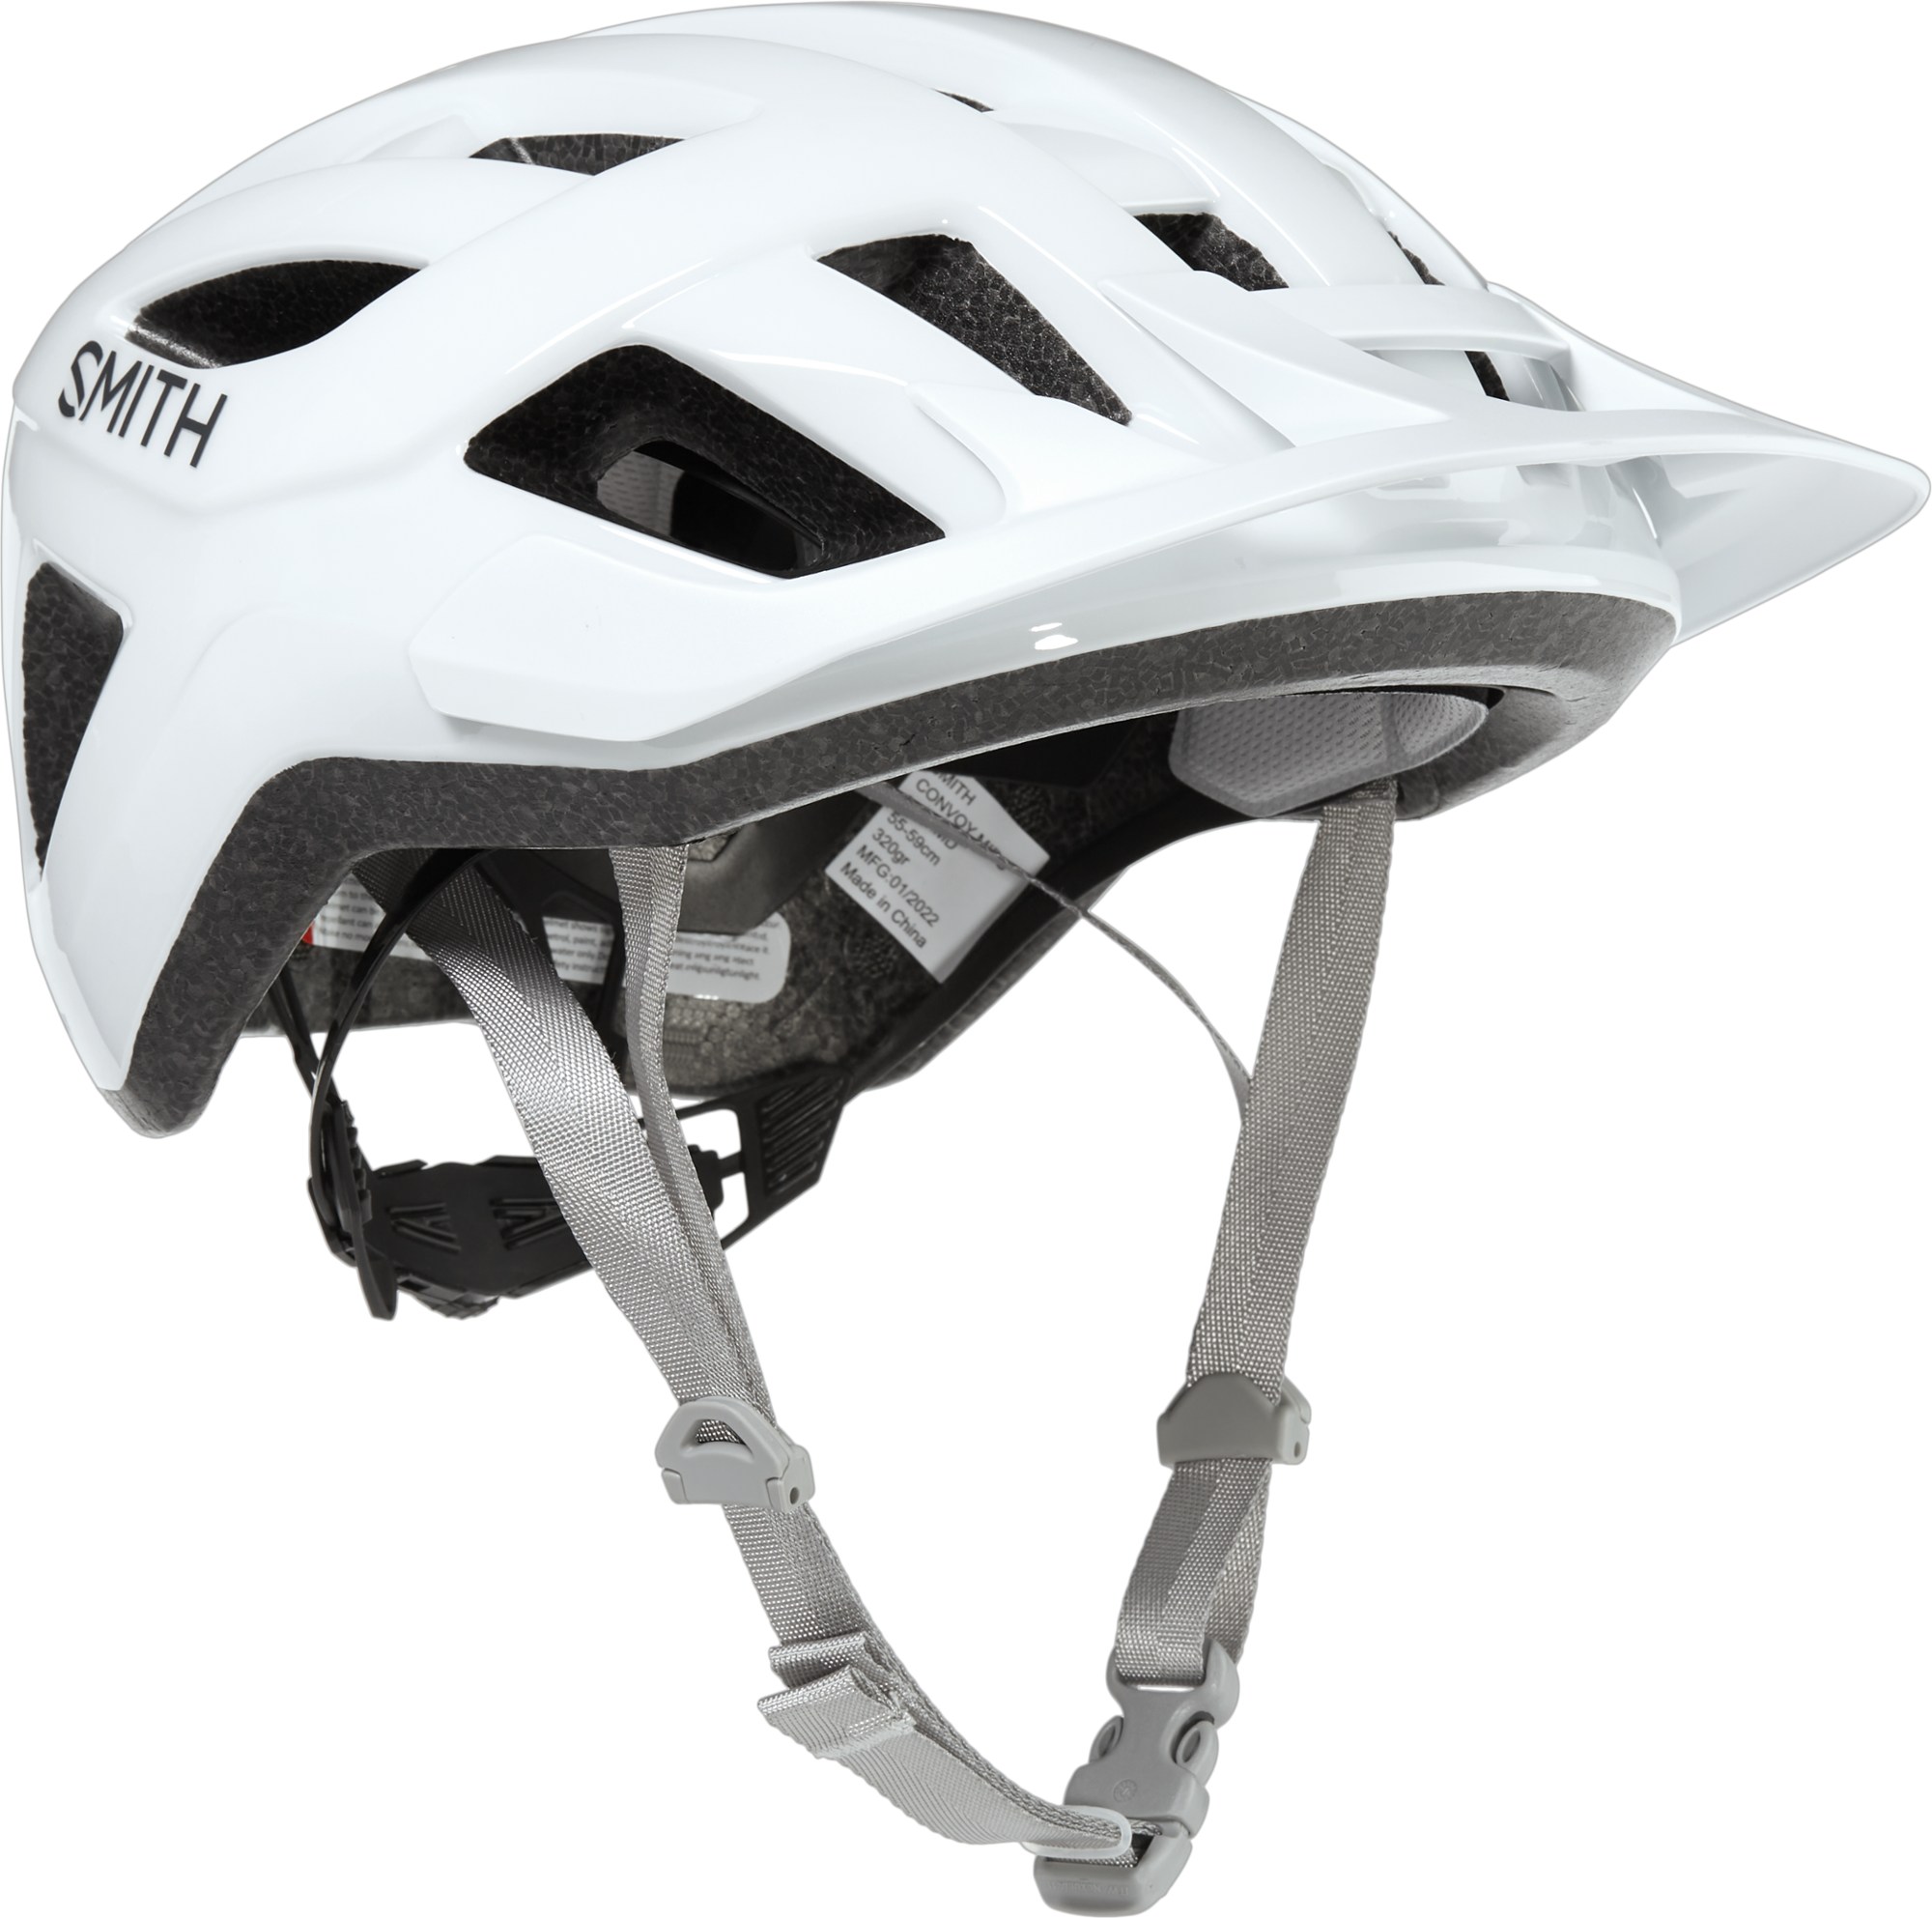 Велосипедный шлем Convoy MIPS Smith, белый smith